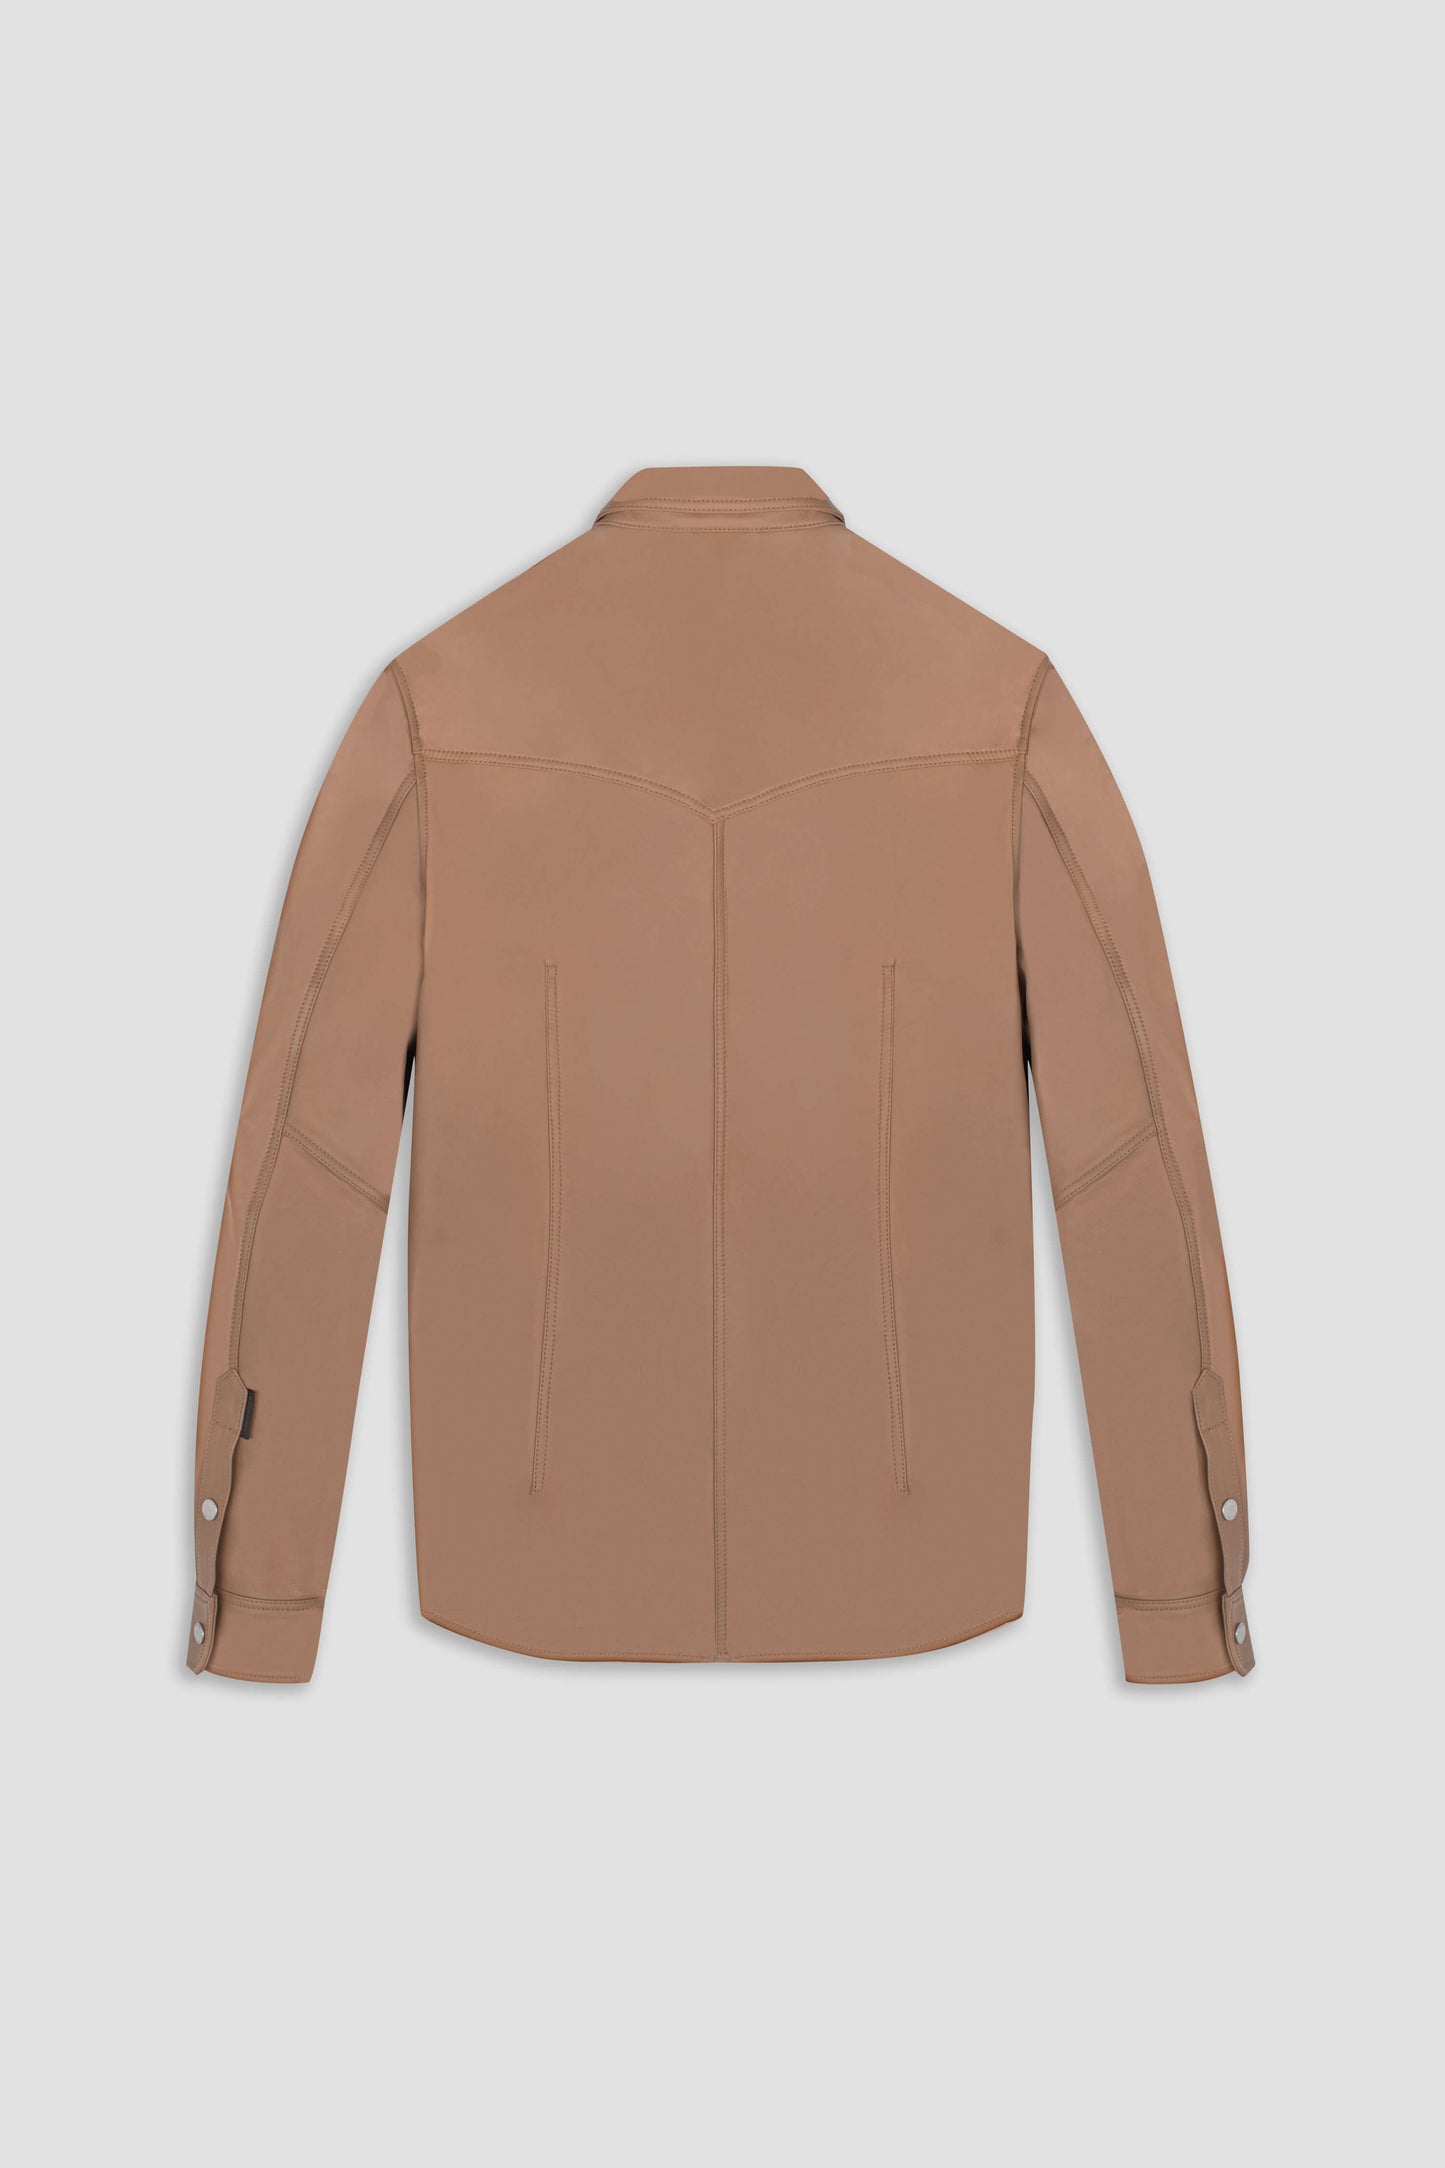 BODA Leather Overshirt: Desert